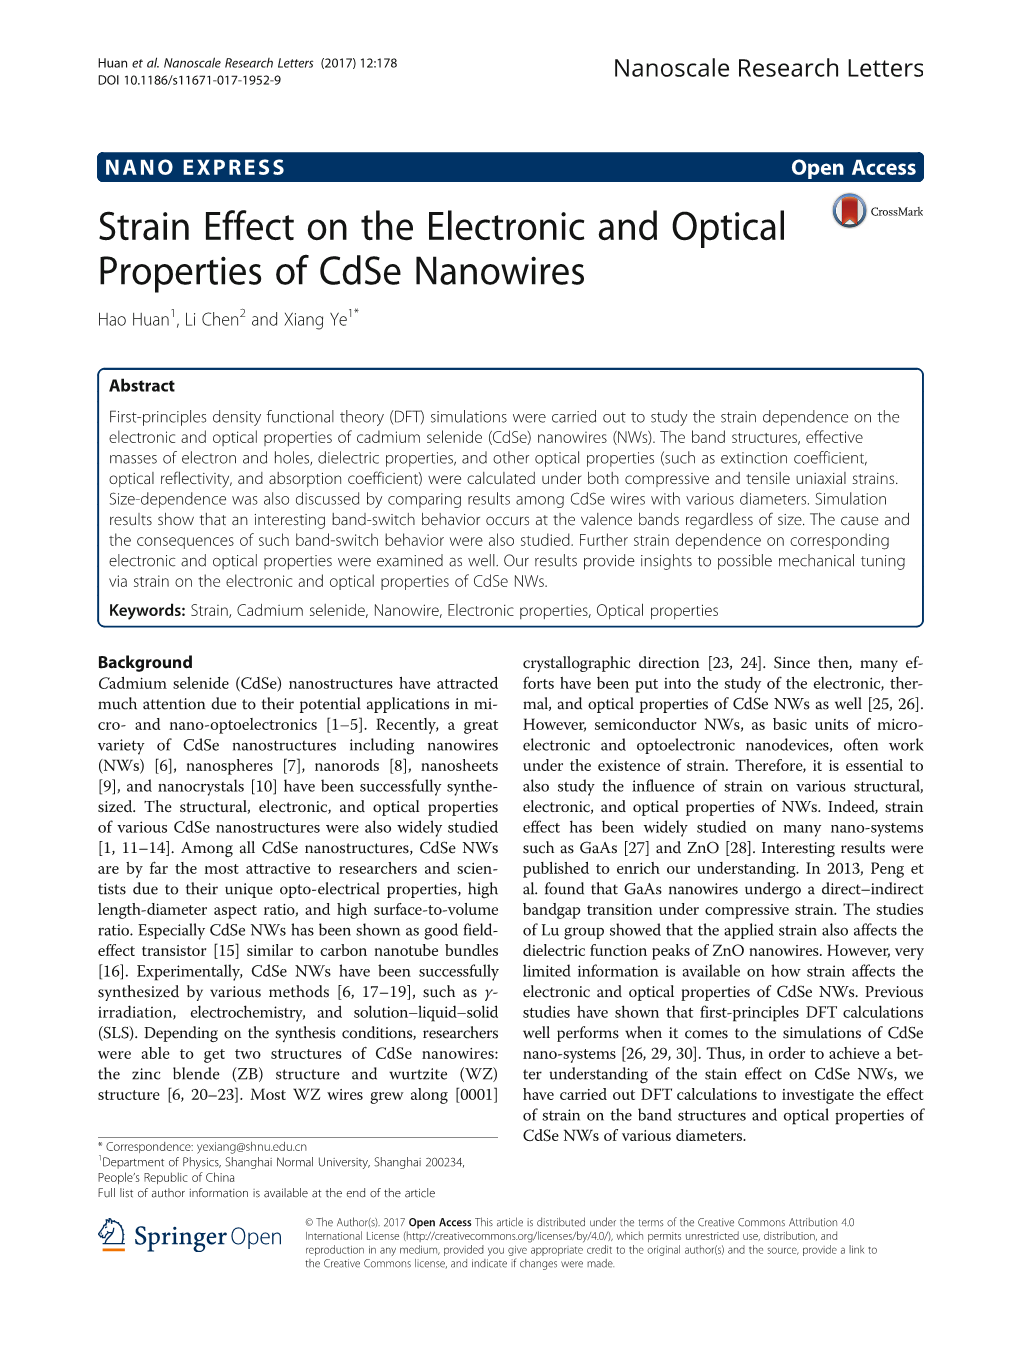 Strain Effect on the Electronic and Optical Properties of Cdse Nanowires Hao Huan1, Li Chen2 and Xiang Ye1*